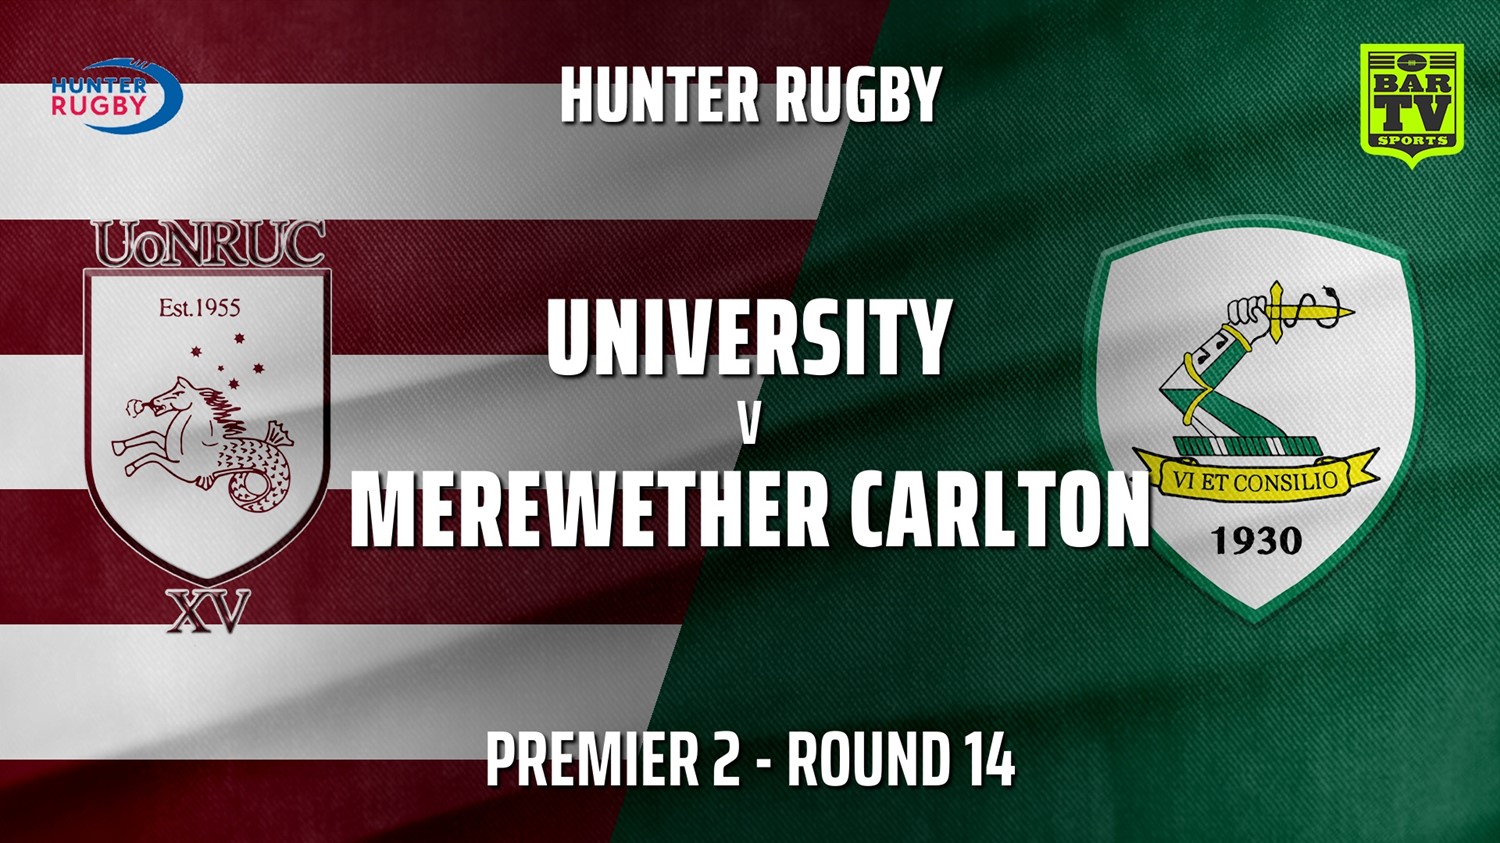 210724-Hunter Rugby Round 14 - Premier 2 - University Of Newcastle v Merewether Carlton Slate Image